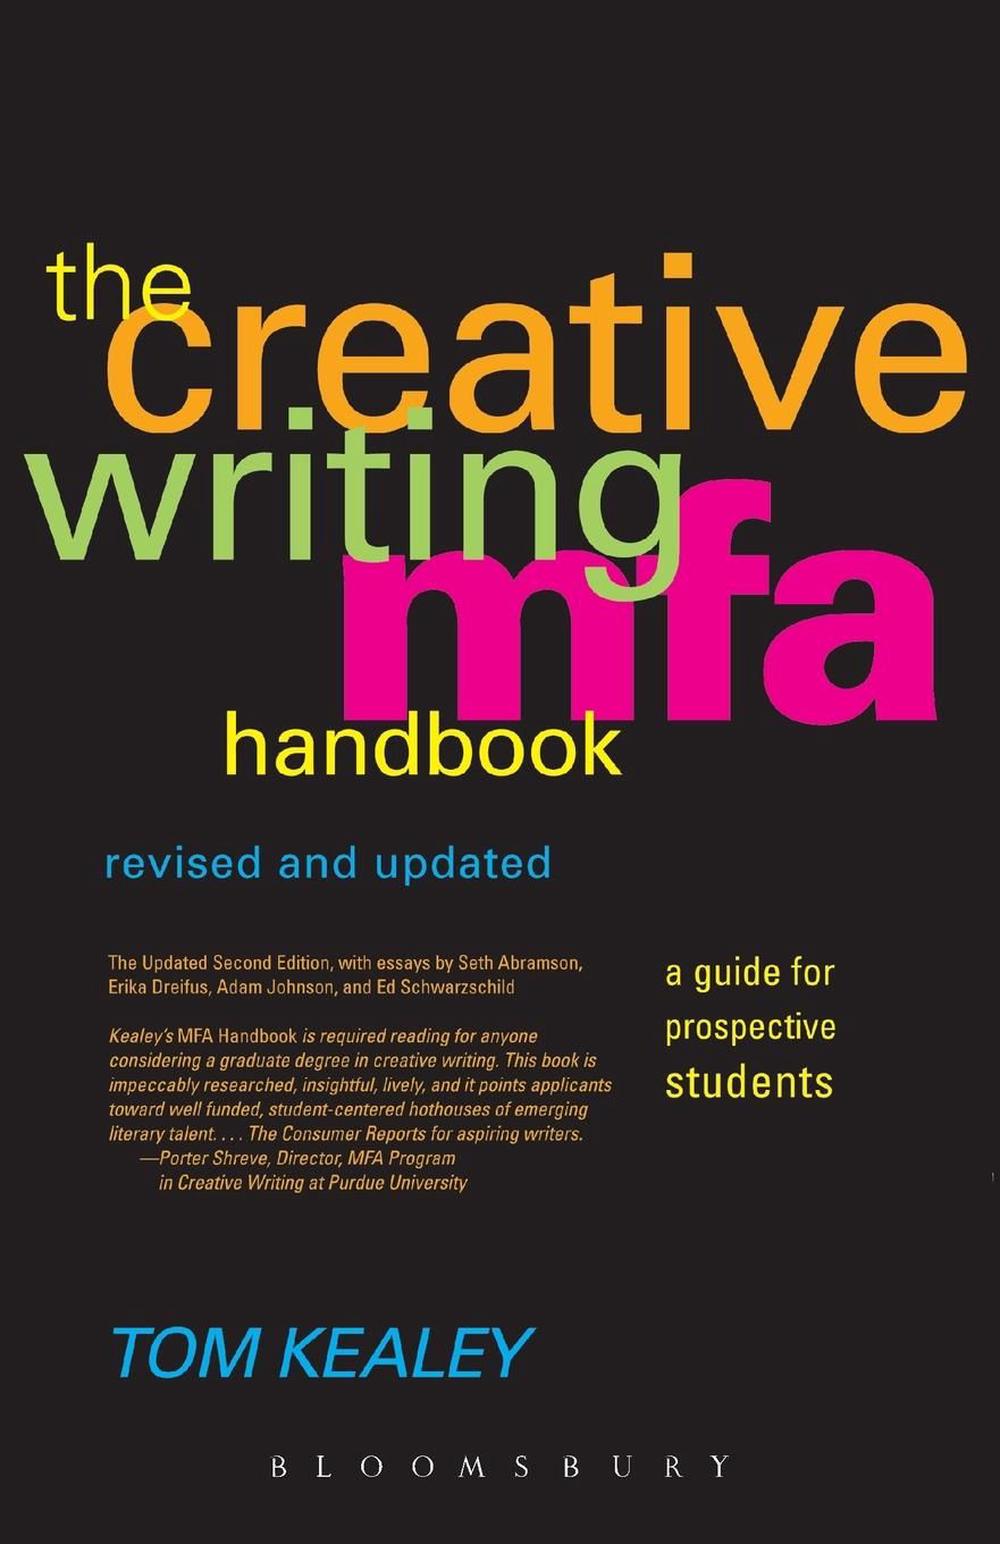 purdue university creative writing mfa